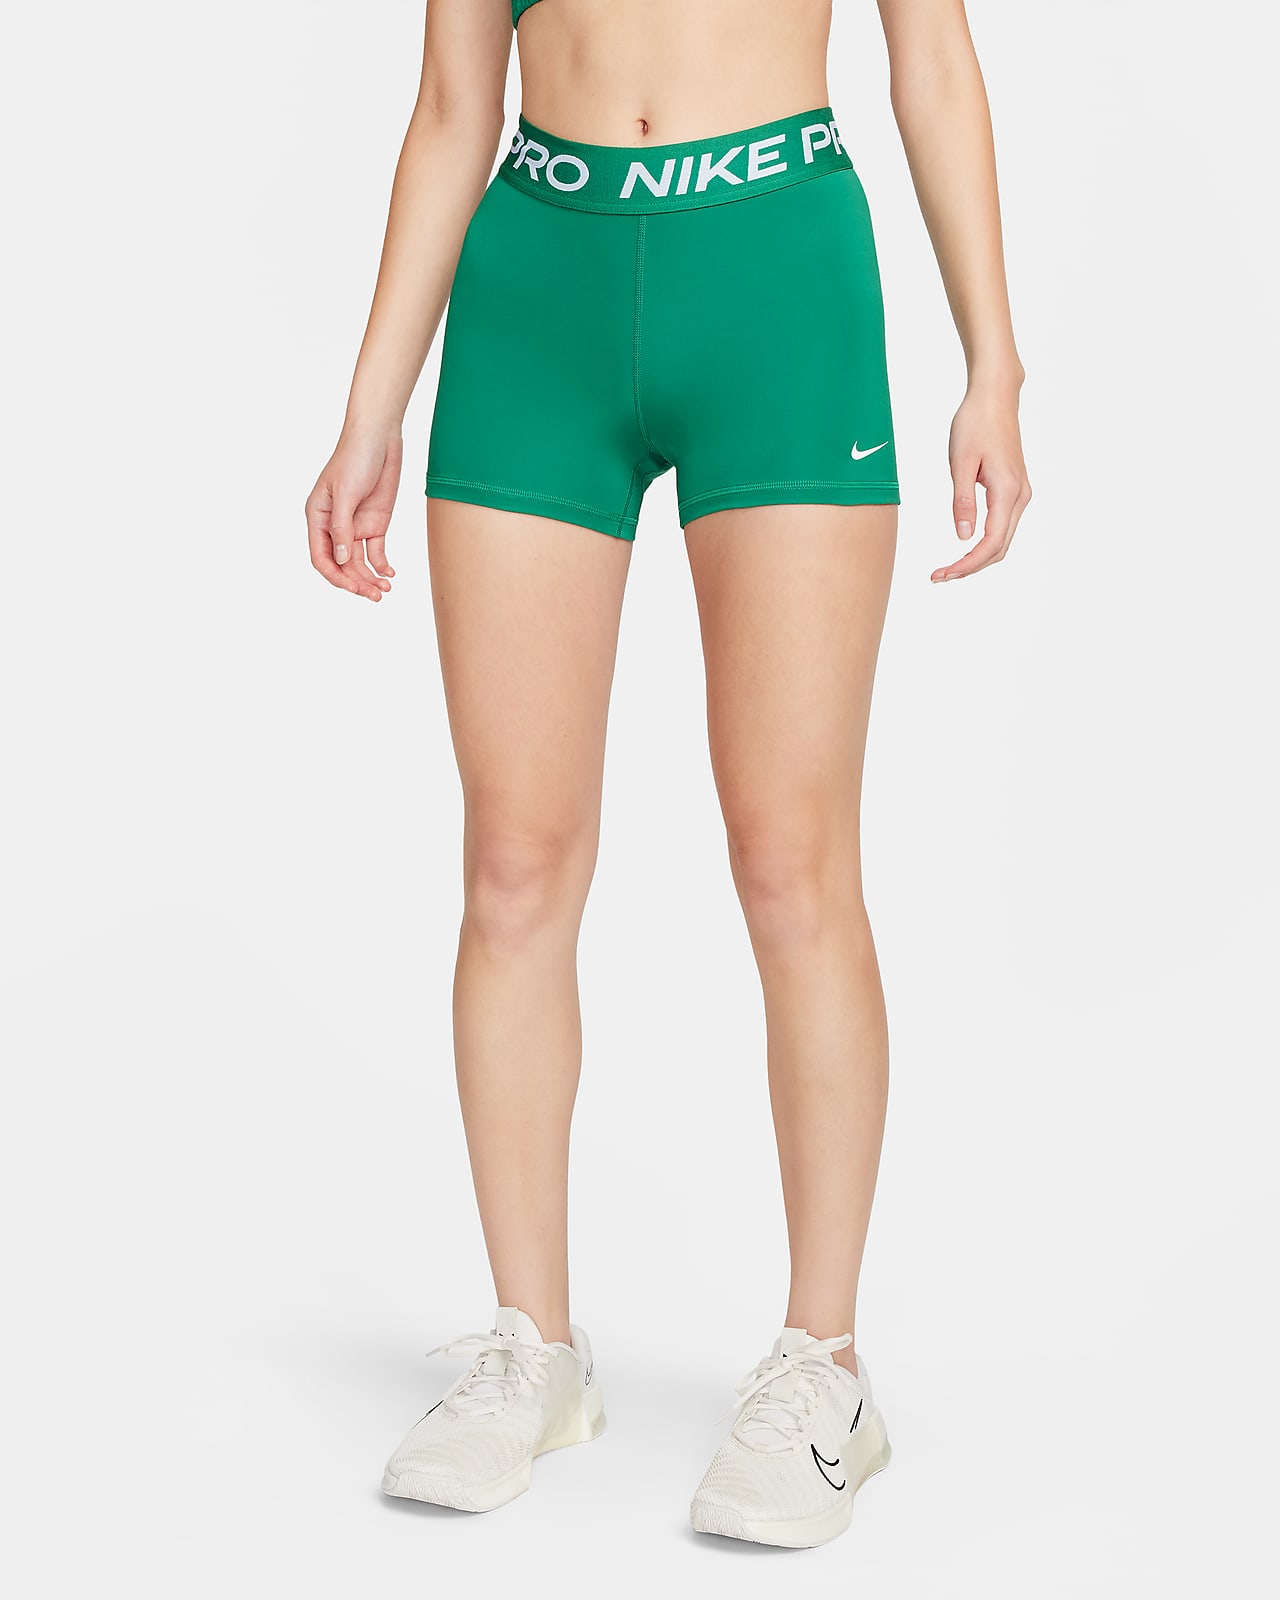 Shorts de 7.5 cm para mujer Nike Pro